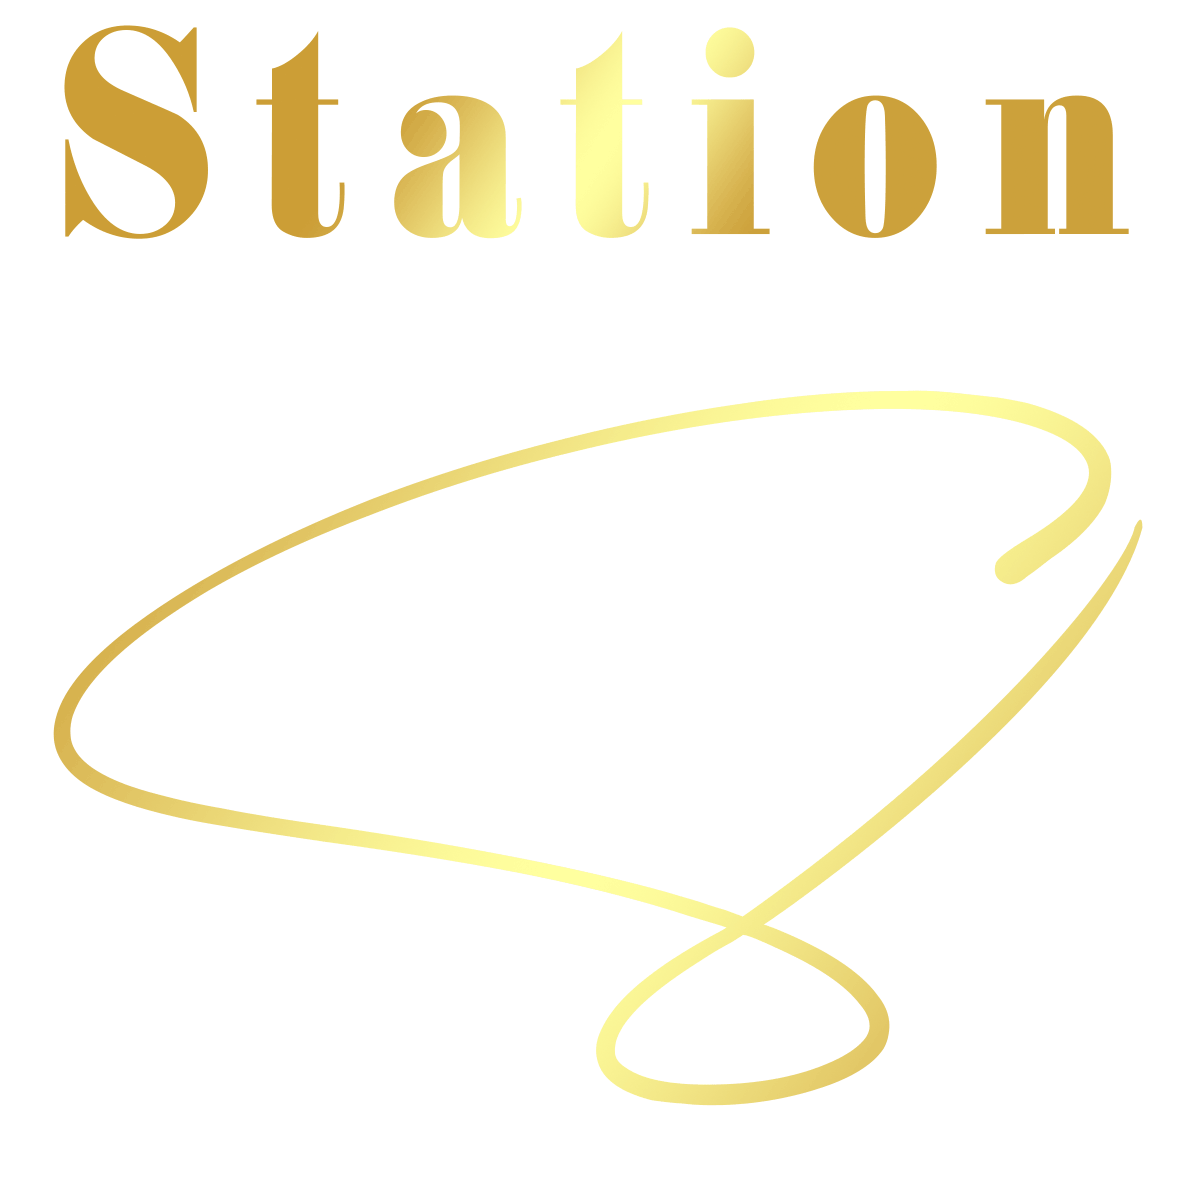 Station 8